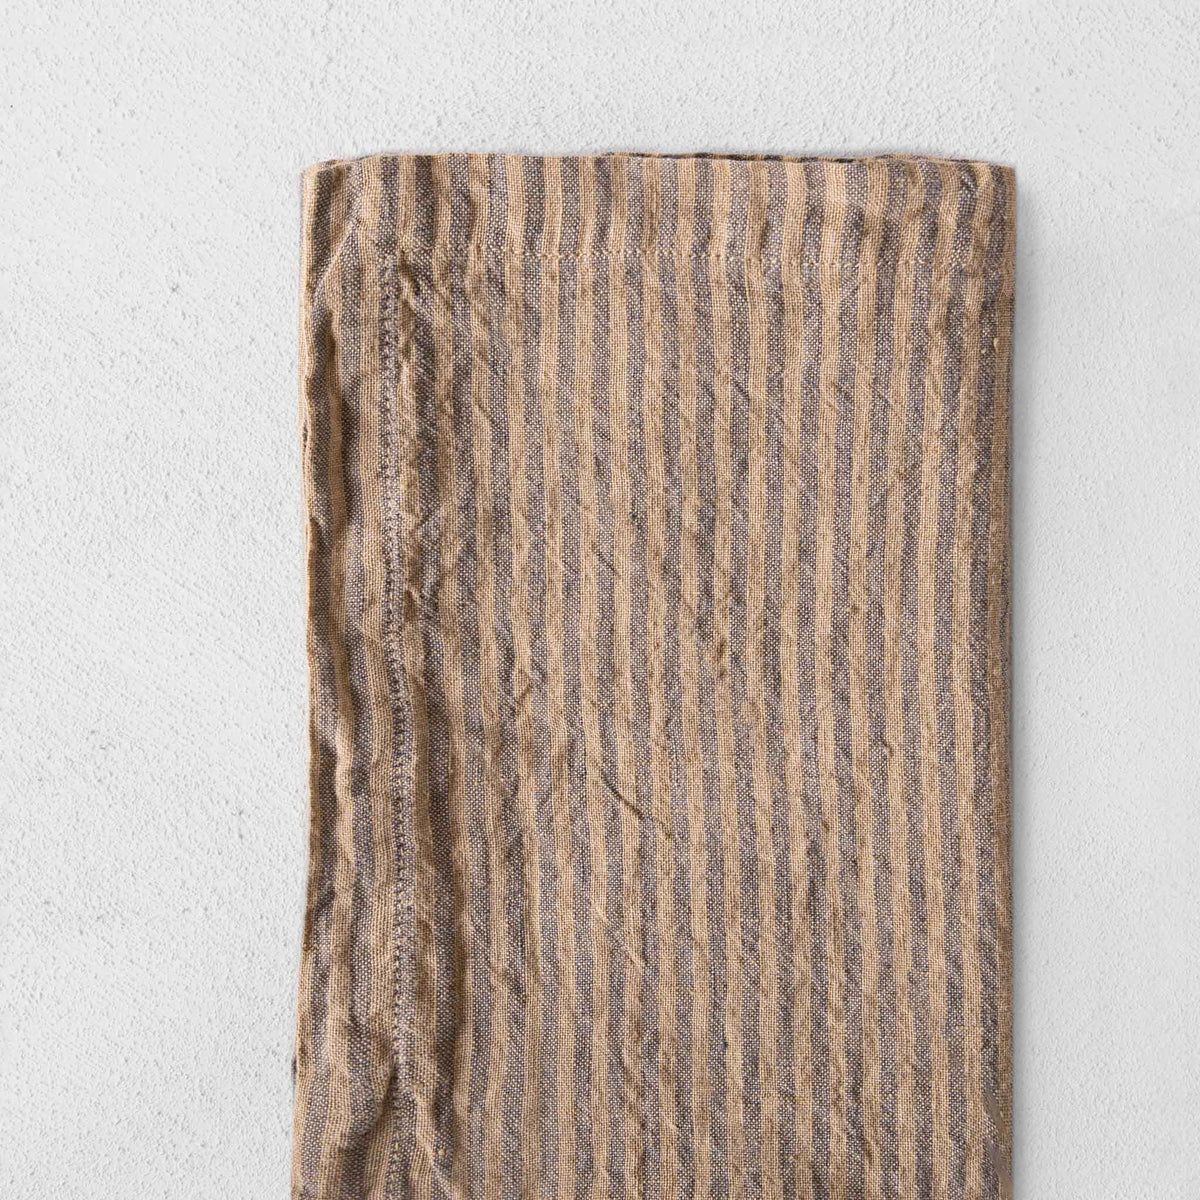 Basix Stripe Linen Napkin - Carmel/Tempest